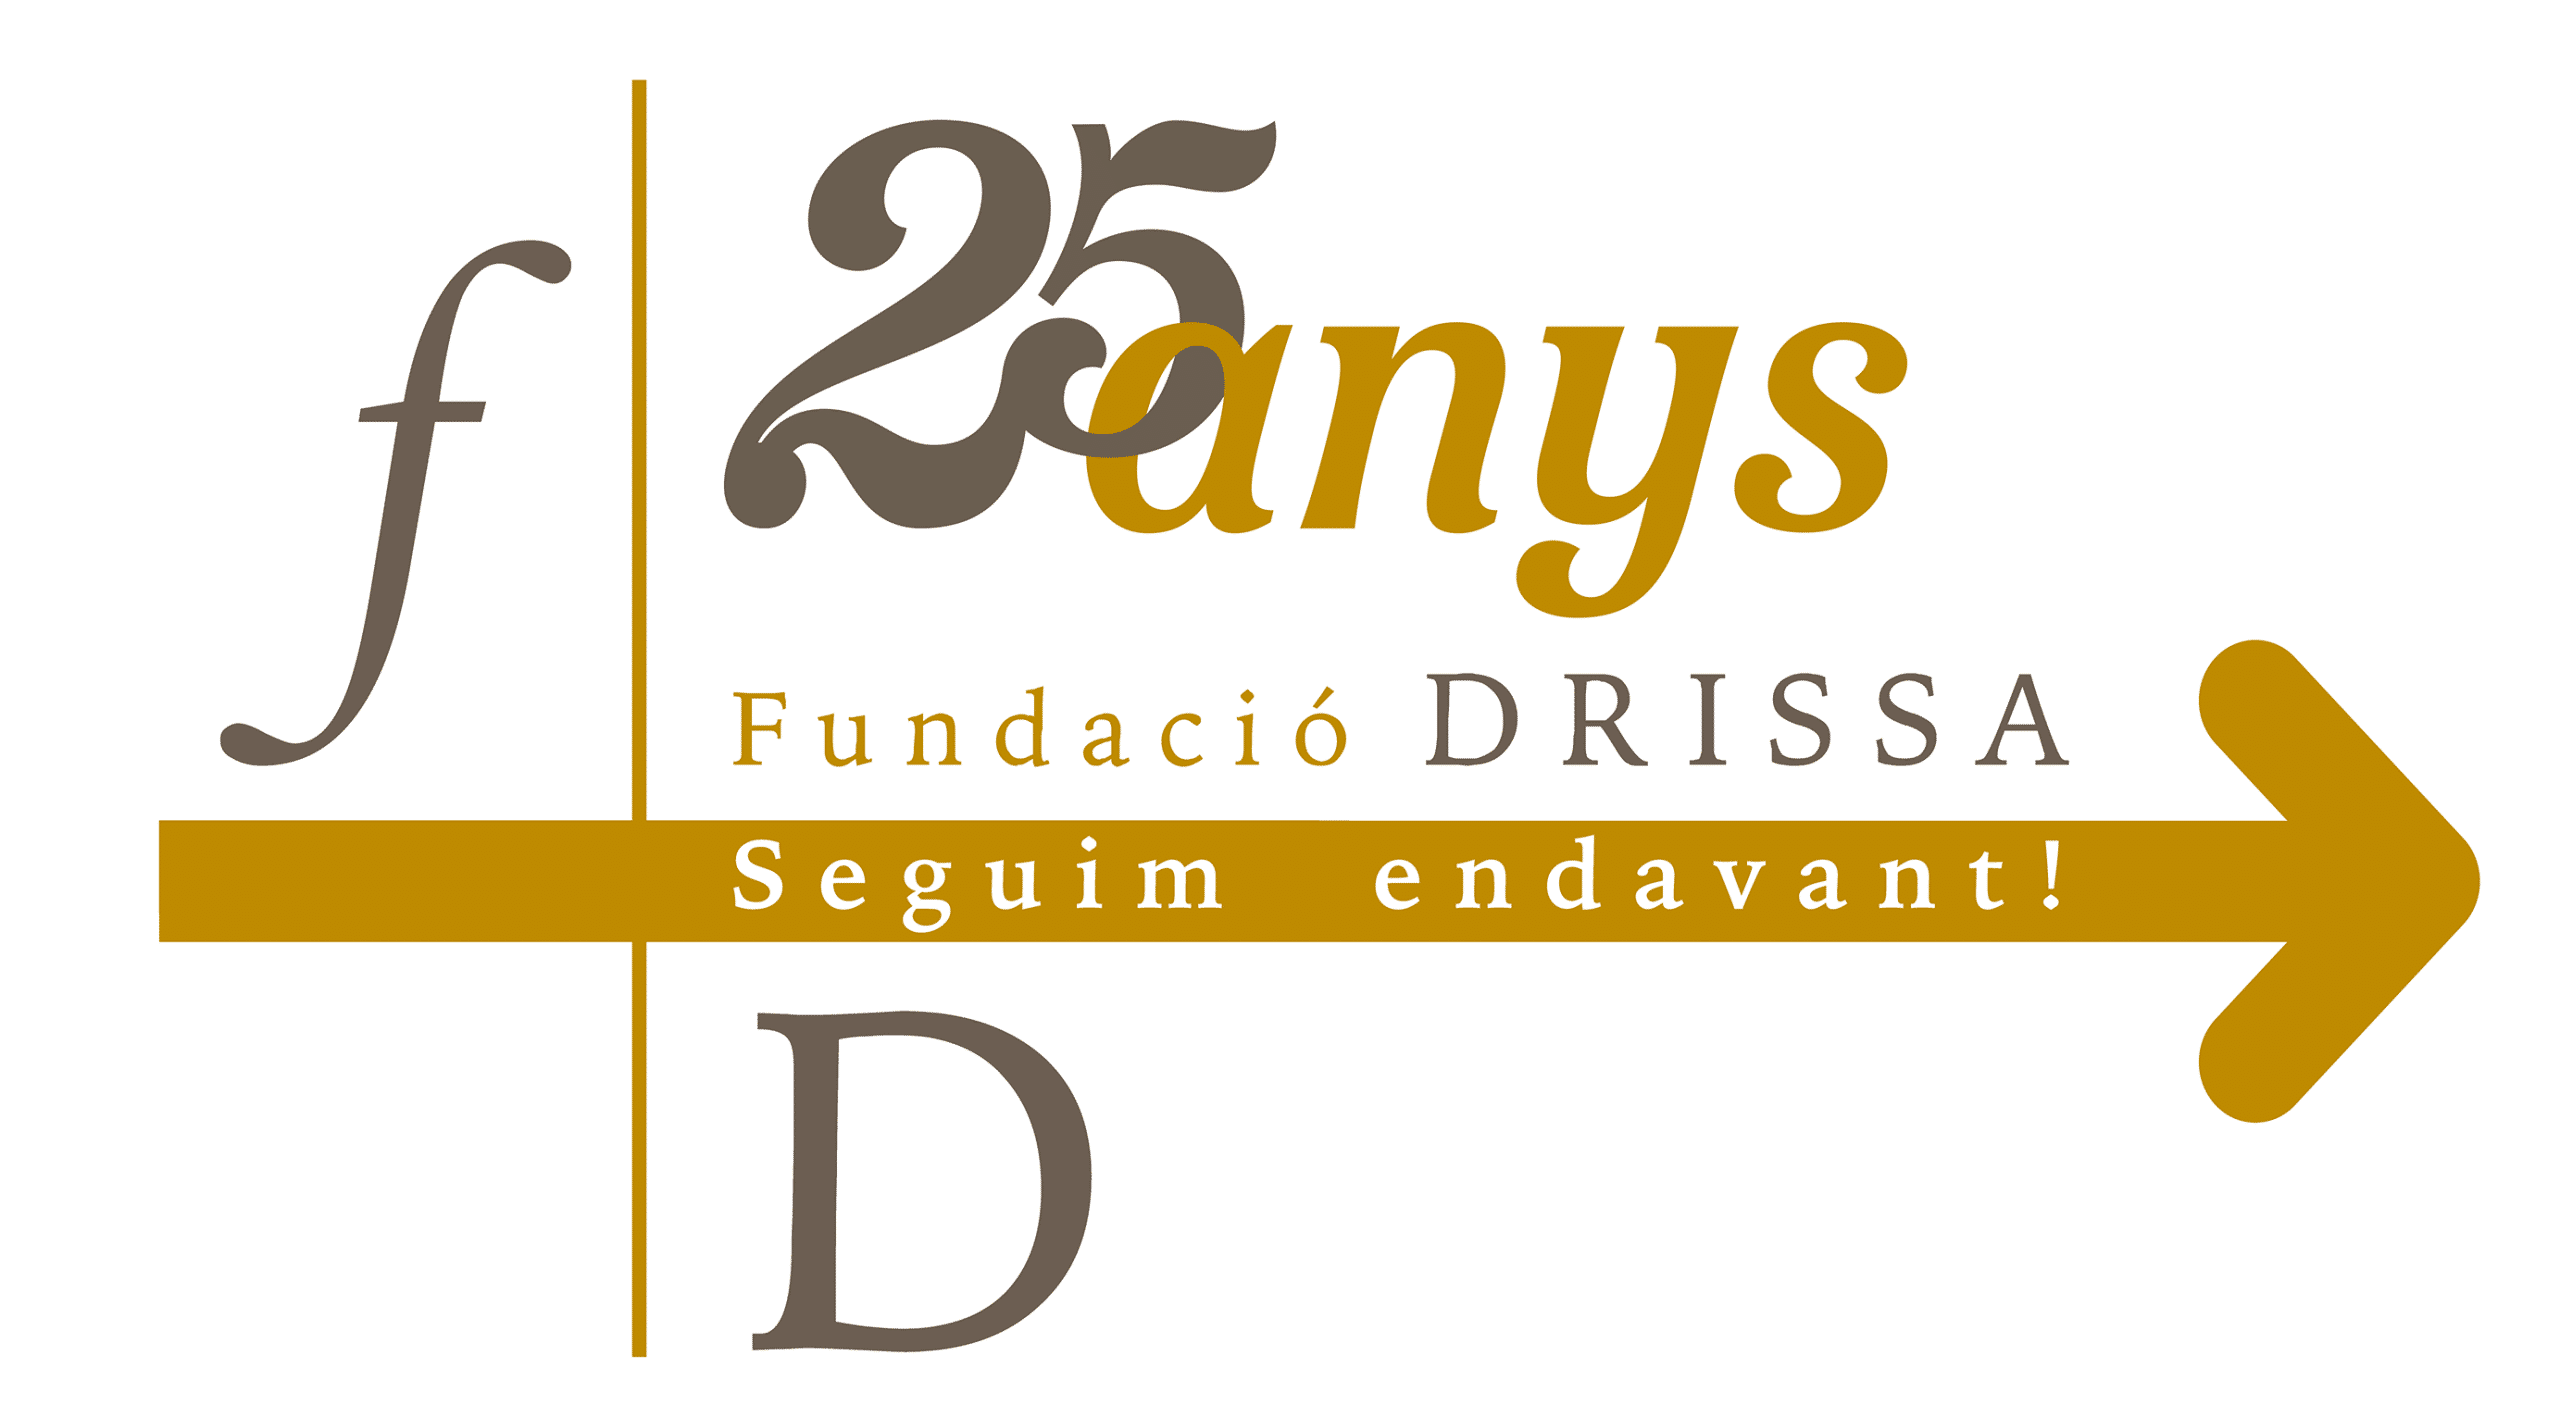 (c) Fundaciodrissa.com